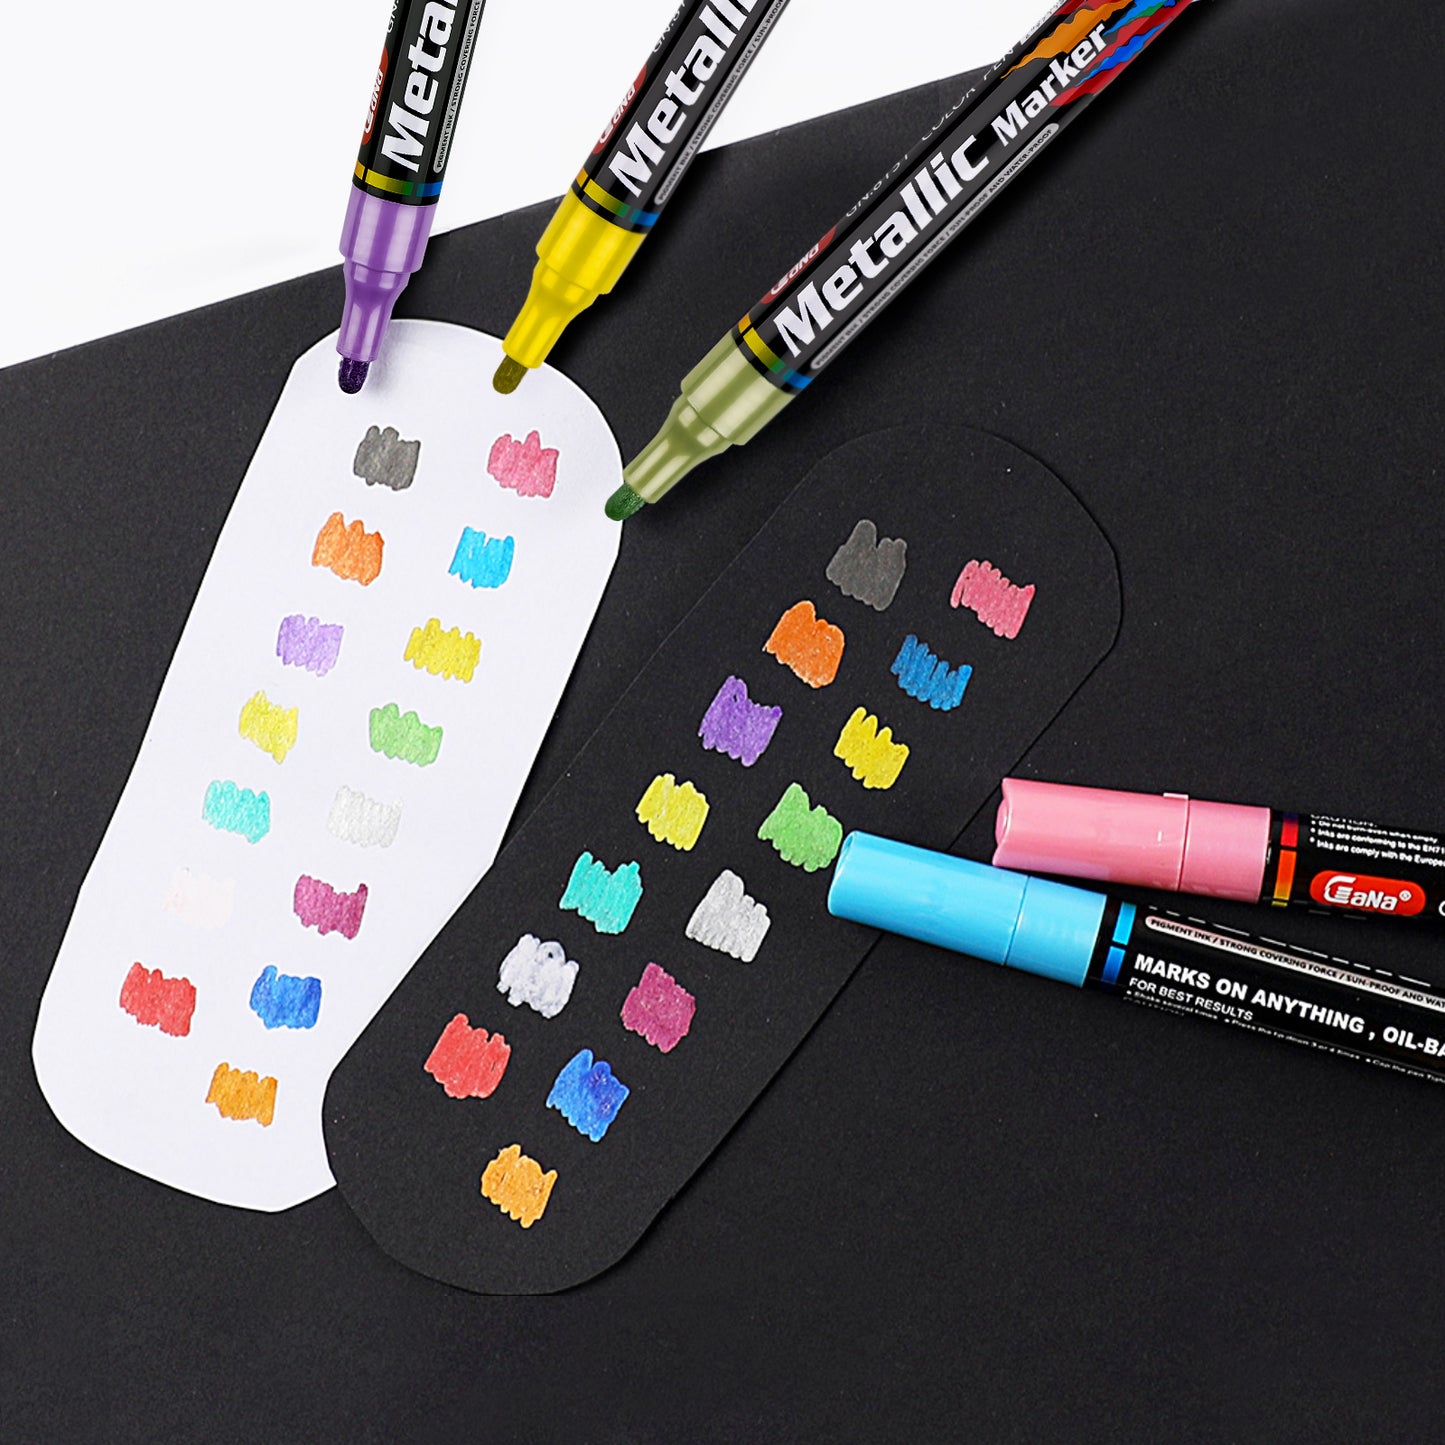 15 Color Assorted Metallic Marker Pens, 3mm Tip Sheen Glitter Painting Pen